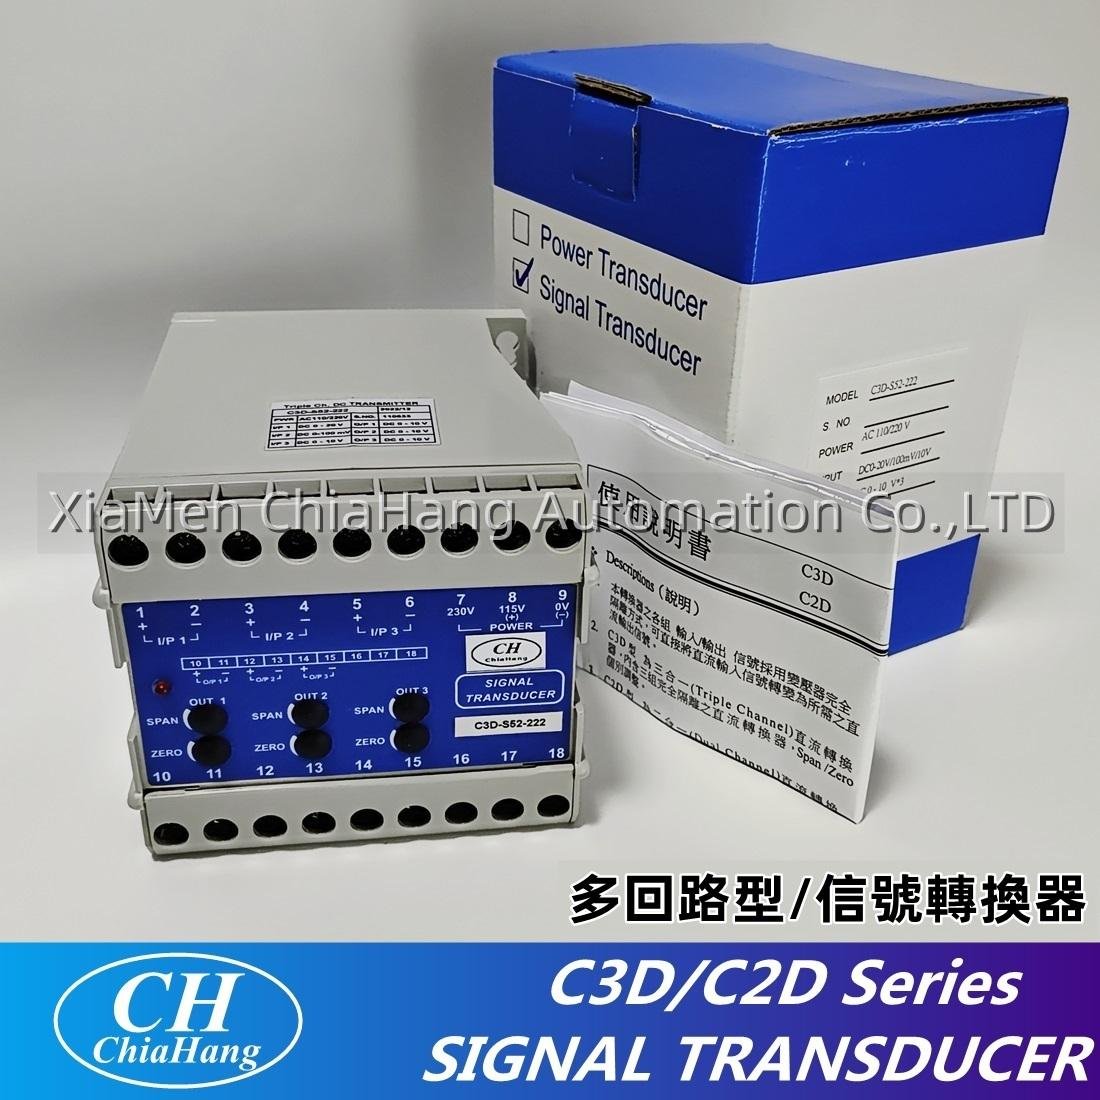 C3D-S52-222 CHIAHANG SIGNAL CONVERTER TR-3DC-S52-2 SIGNAL TRANSDUCER CONCH  AECL  ATX-3DC-S52-222